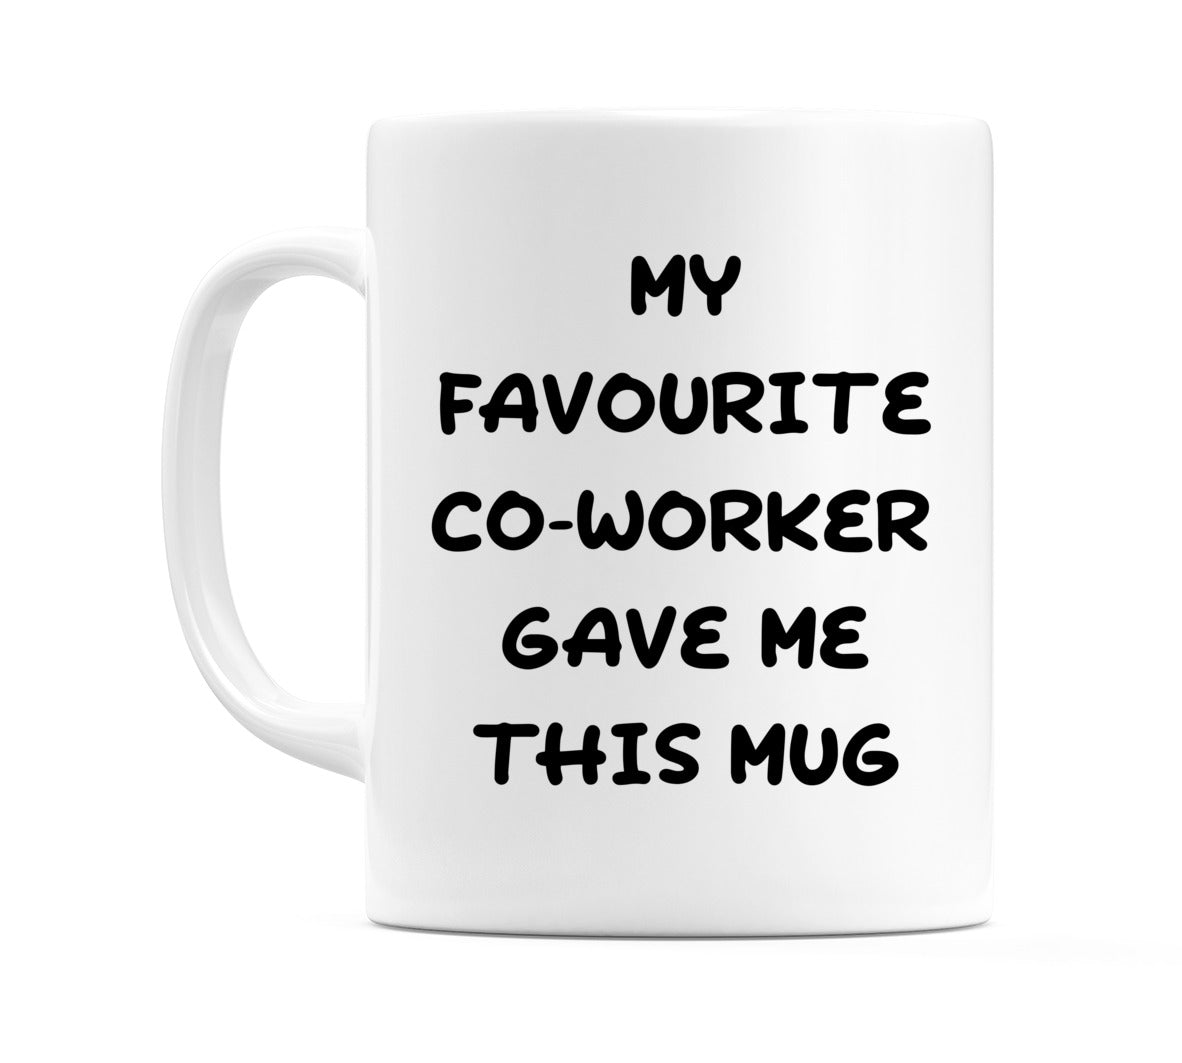 My favourite co-worker gave me this mug Mug